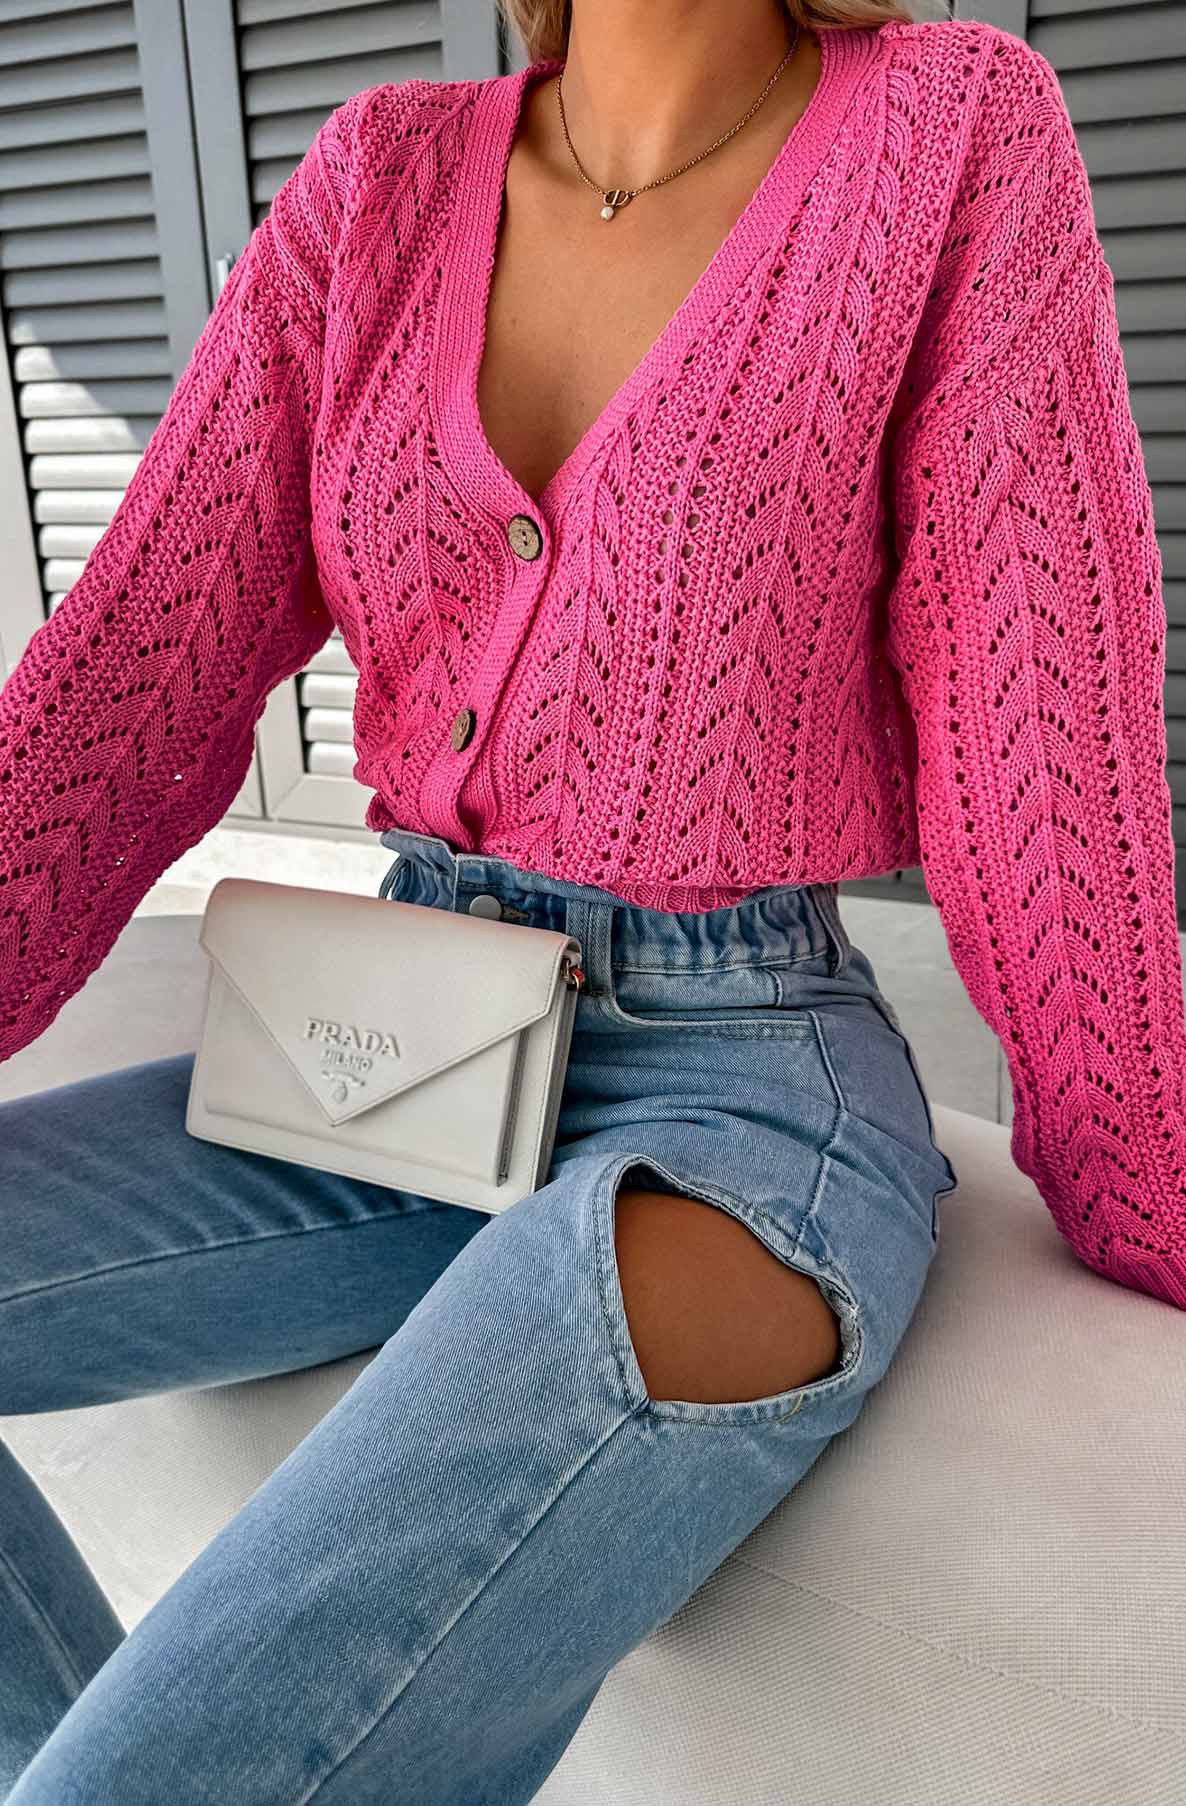 Arlina Crochet Knitted Light Wear Cardigan-Hot Pink